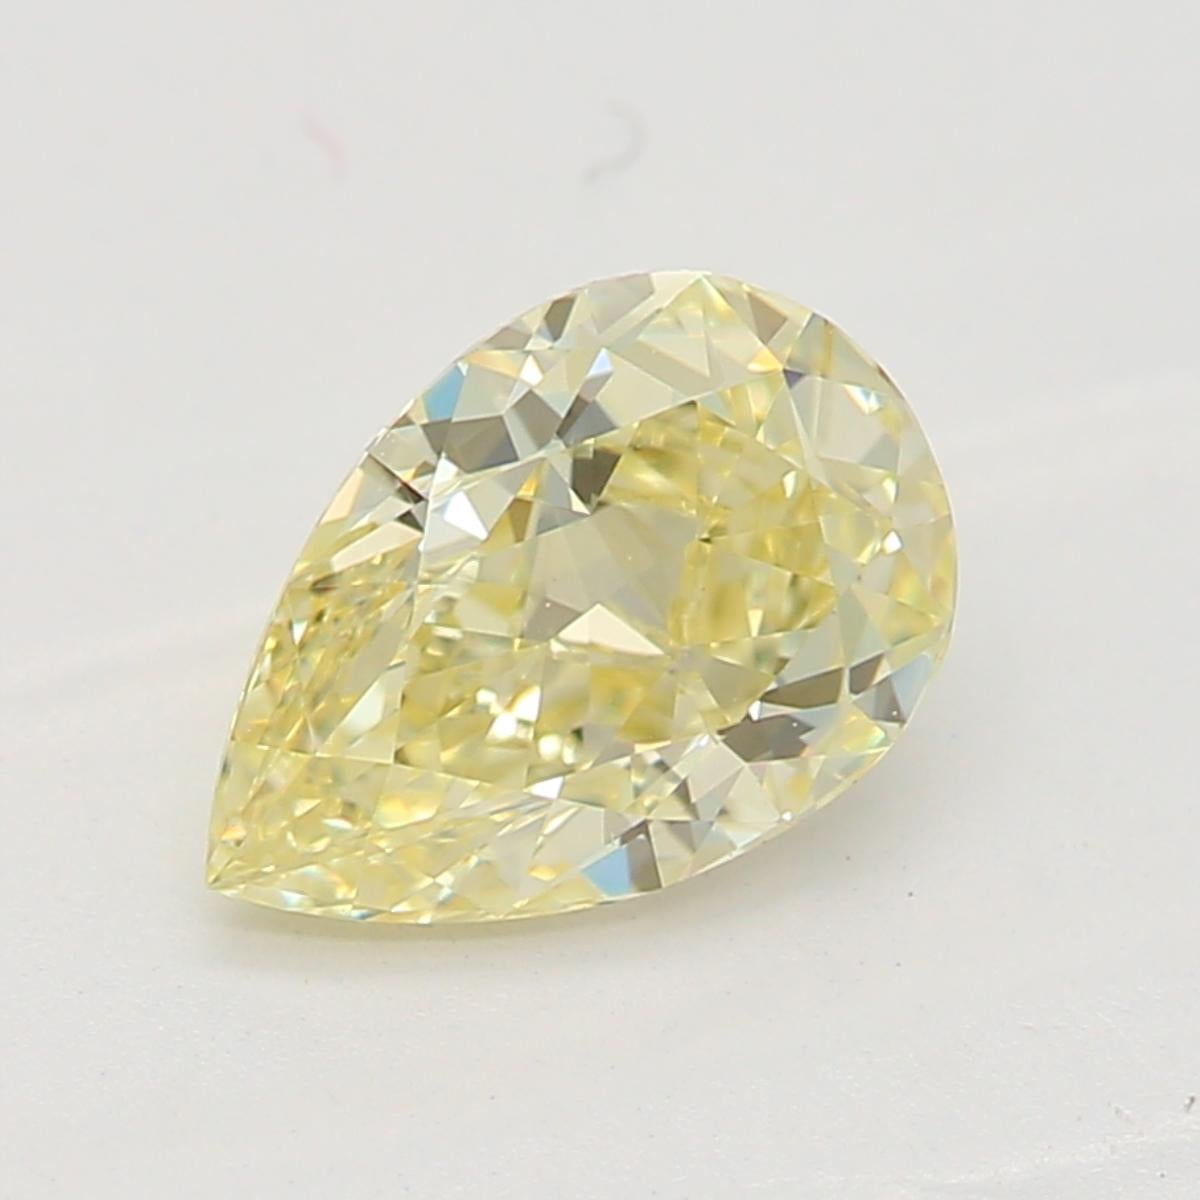 ***100% NATURAL FANCY COLOUR DIAMOND***

✪ Diamond Details ✪

➛ Shape: Pear
➛ Colour Grade: 
➛ Carat: 0.59
➛ Clarity: VVS1
➛ GIA Certified 

^FEATURES OF THE DIAMOND^

Our 0.59 carat pear-cut diamond has 58 facets, showcasing a brilliant and elegant